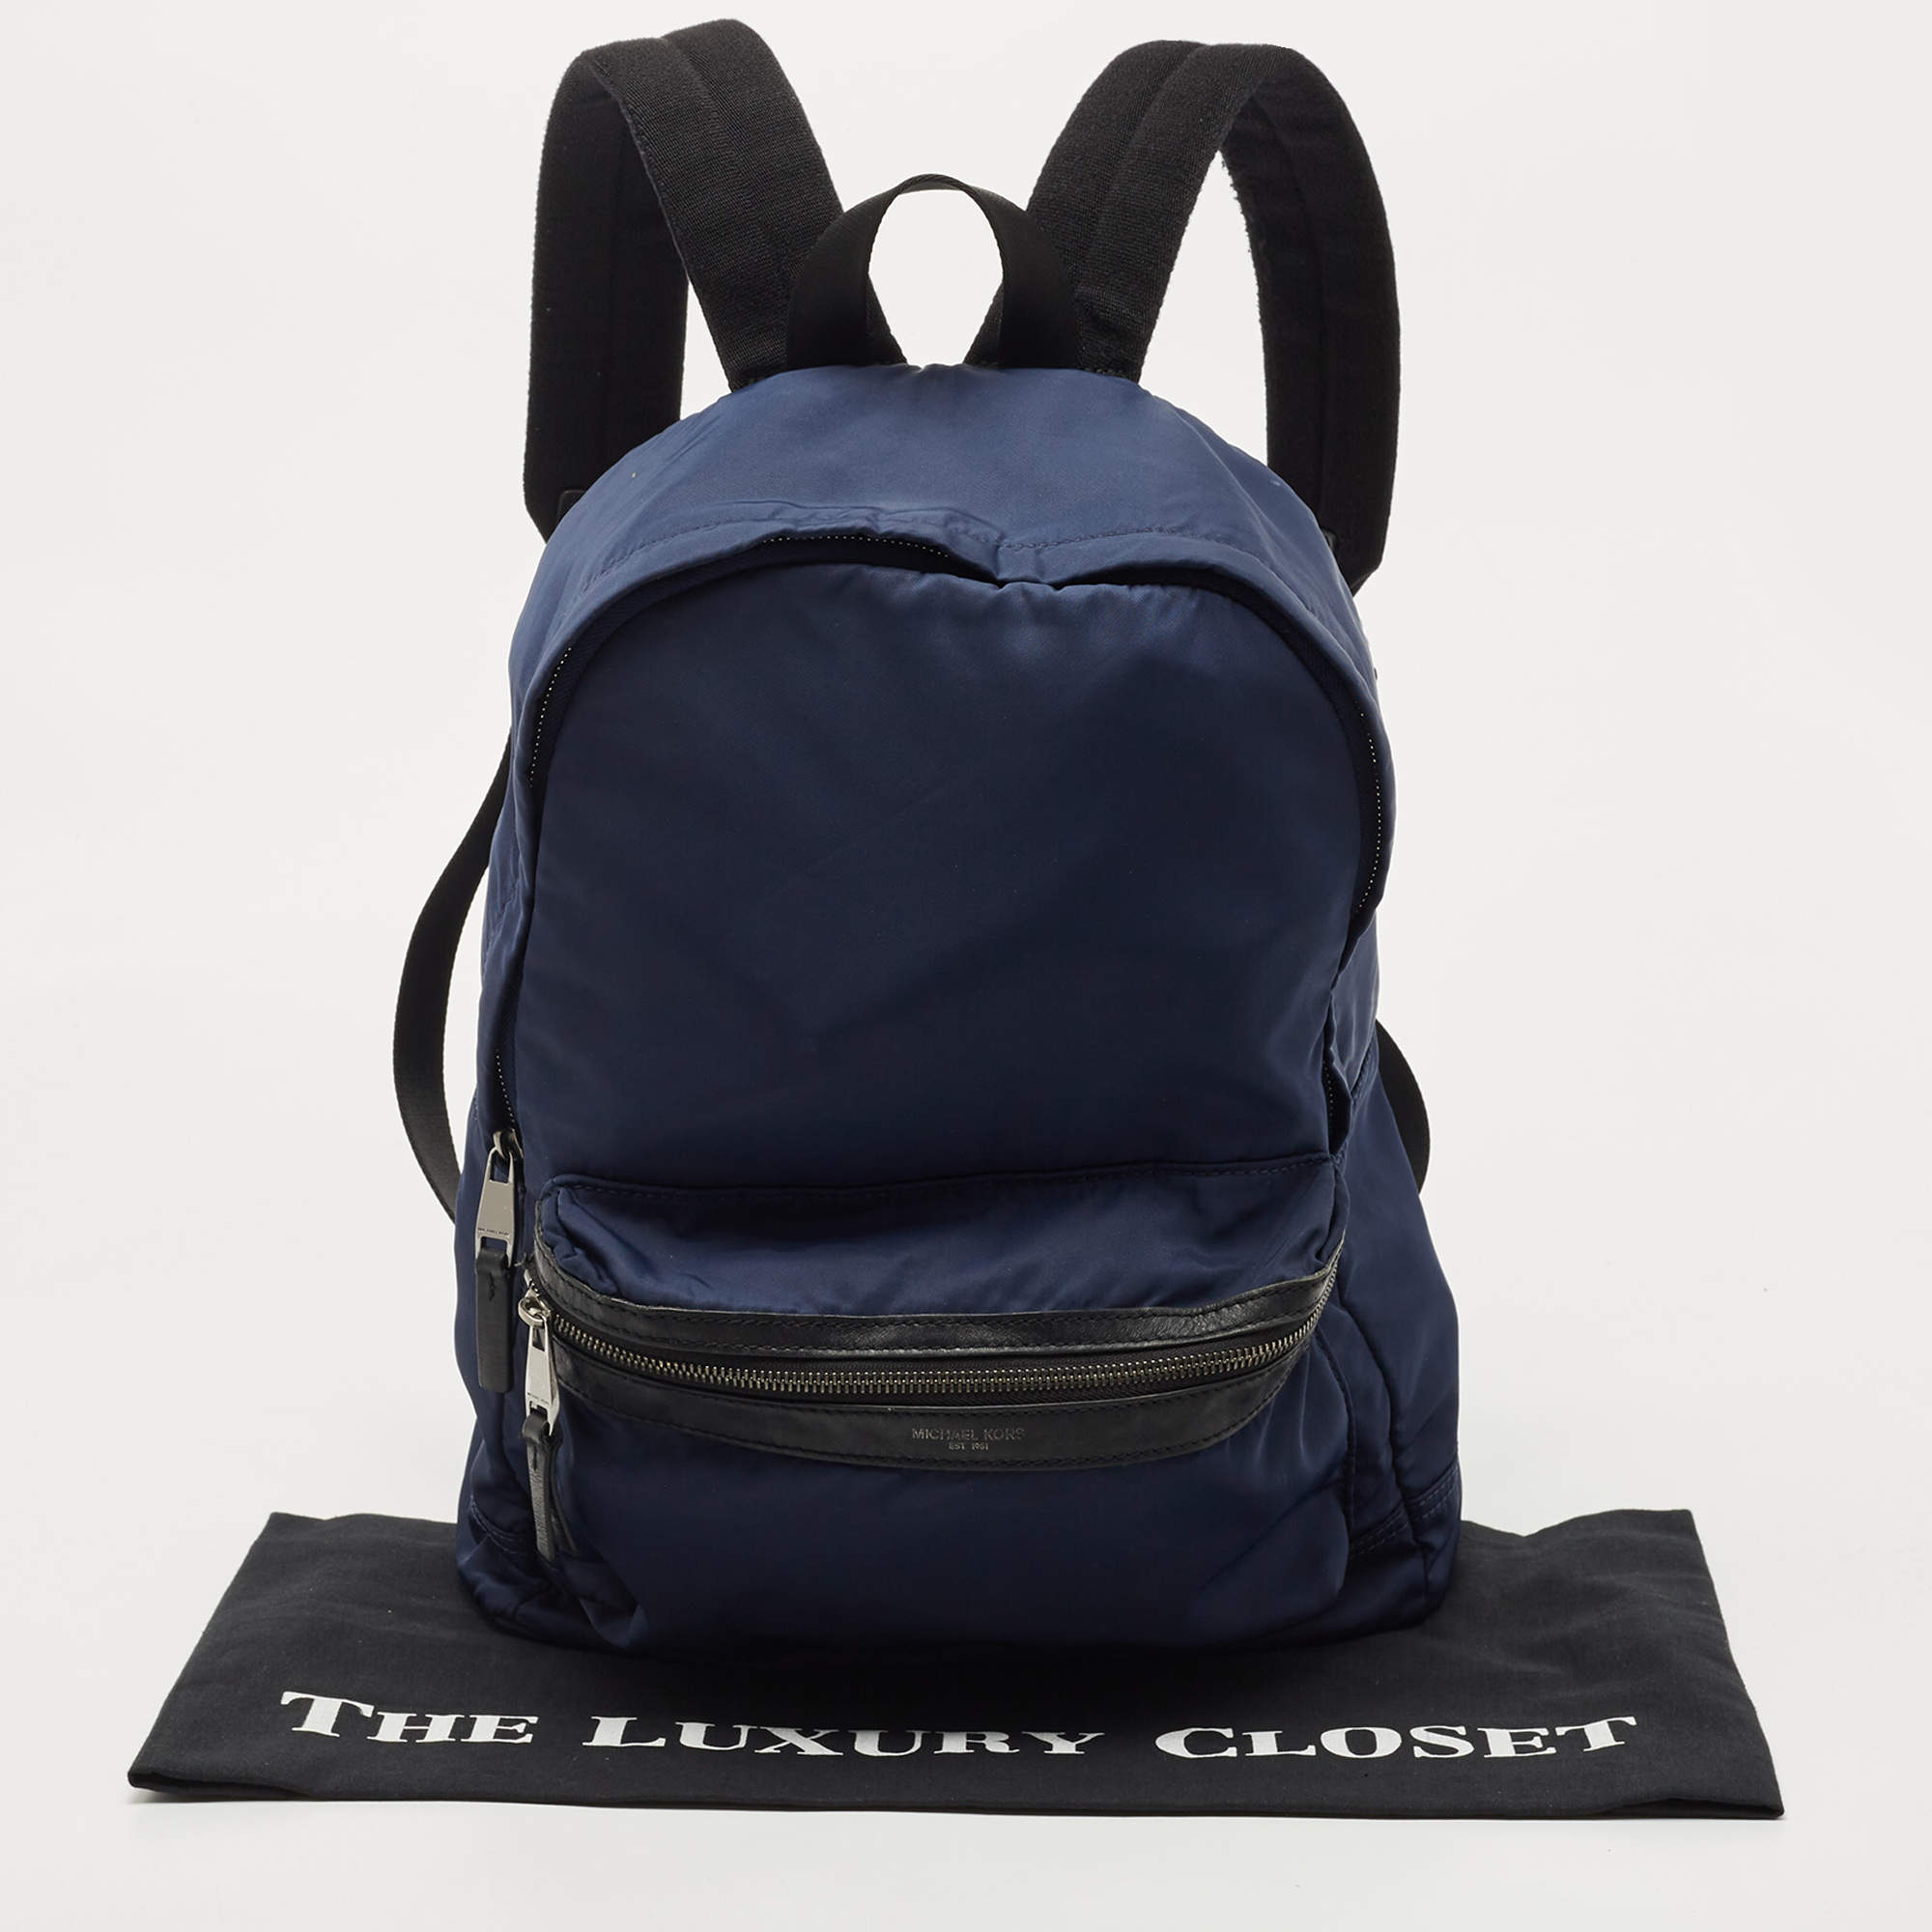 Michael Kors City logo-print Backpack - Black